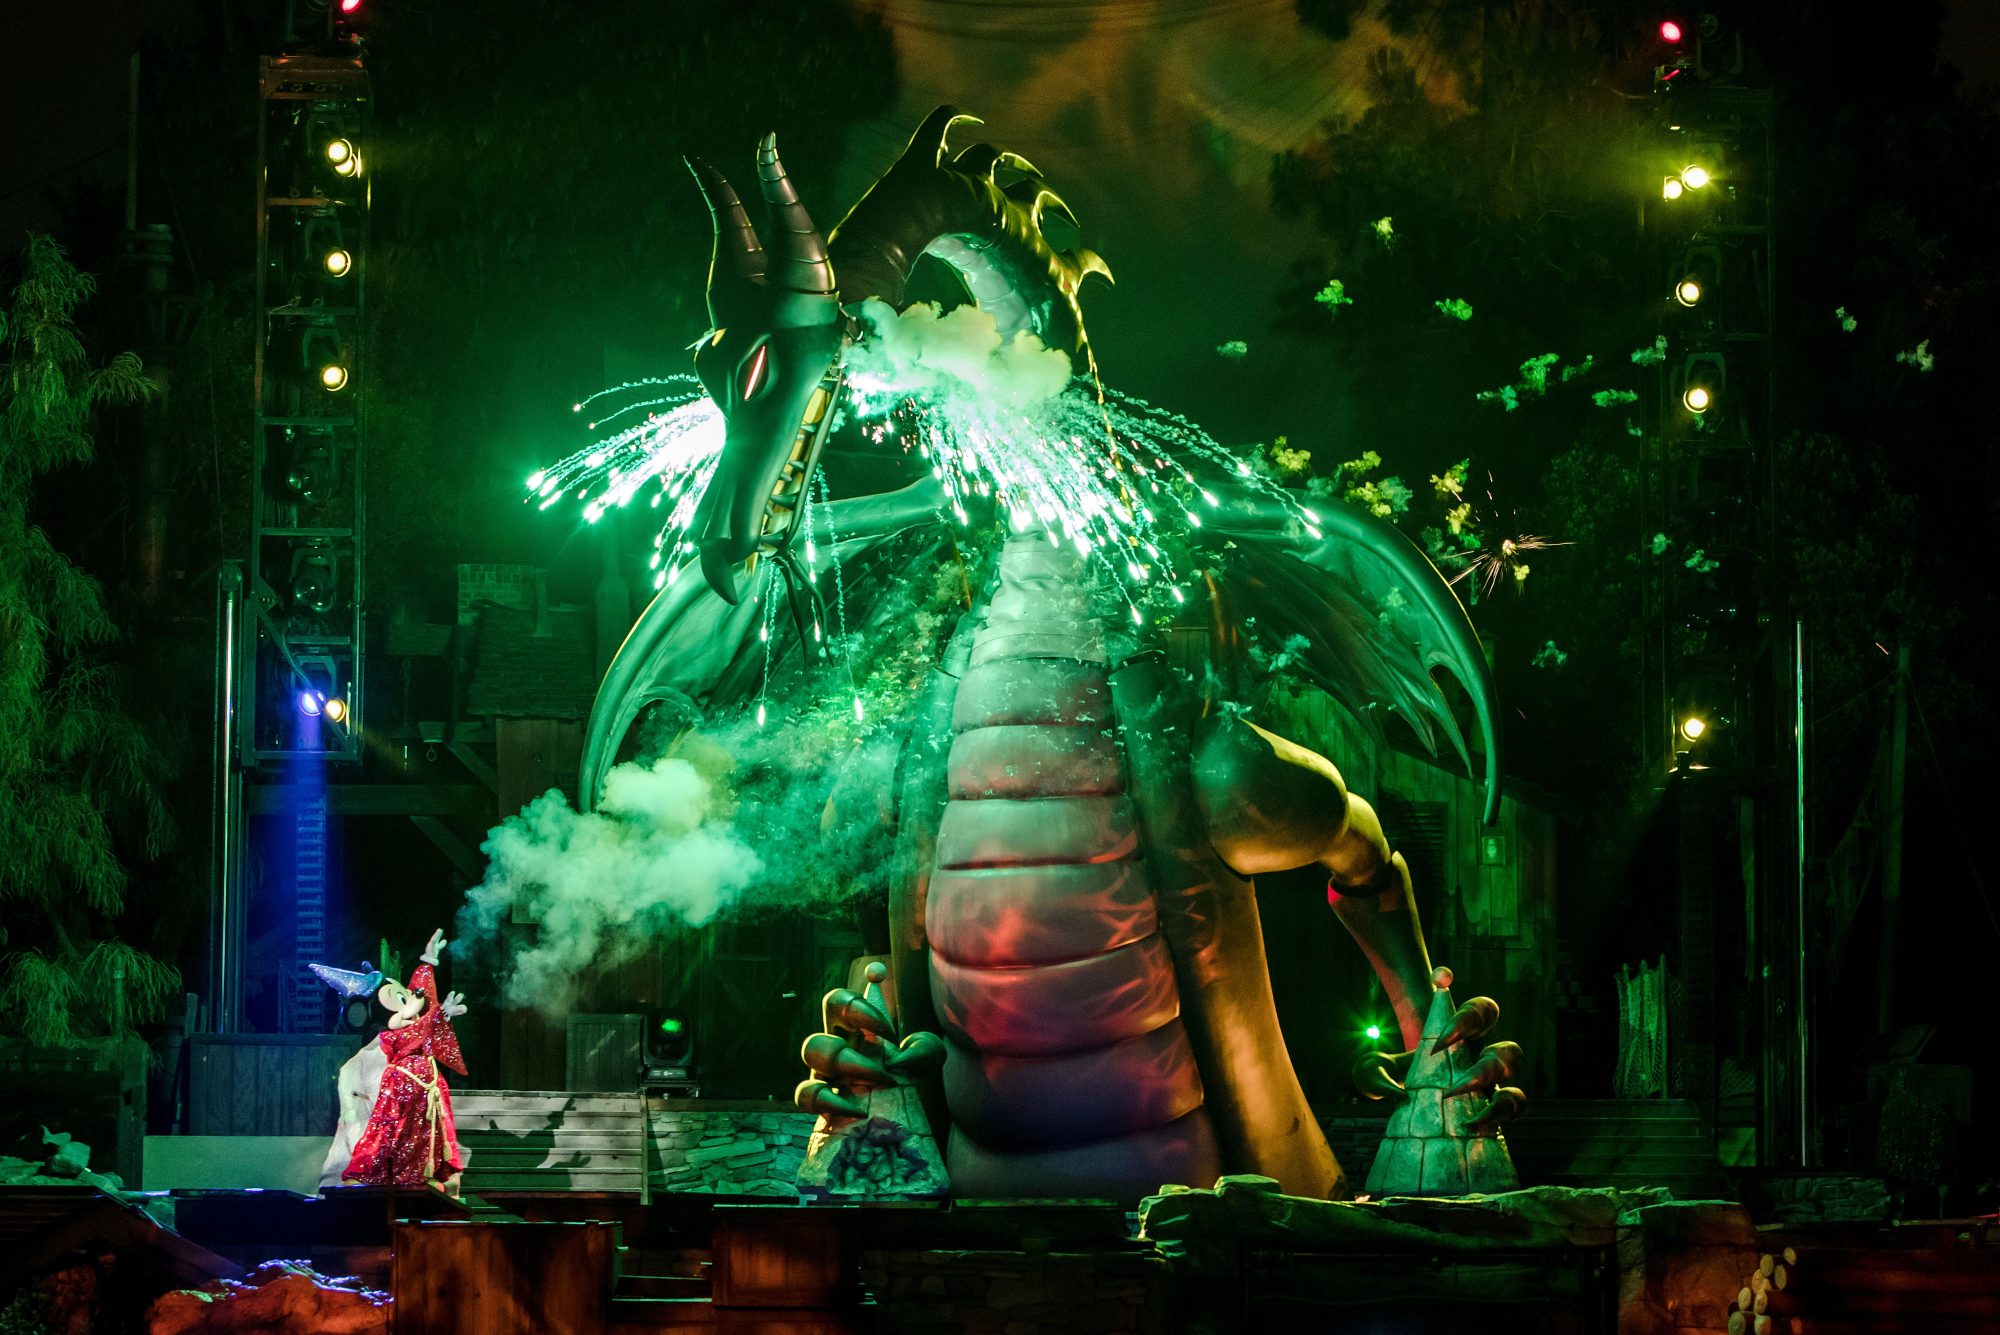 The Maleficent dragon at Disneyland's Fantasmic show